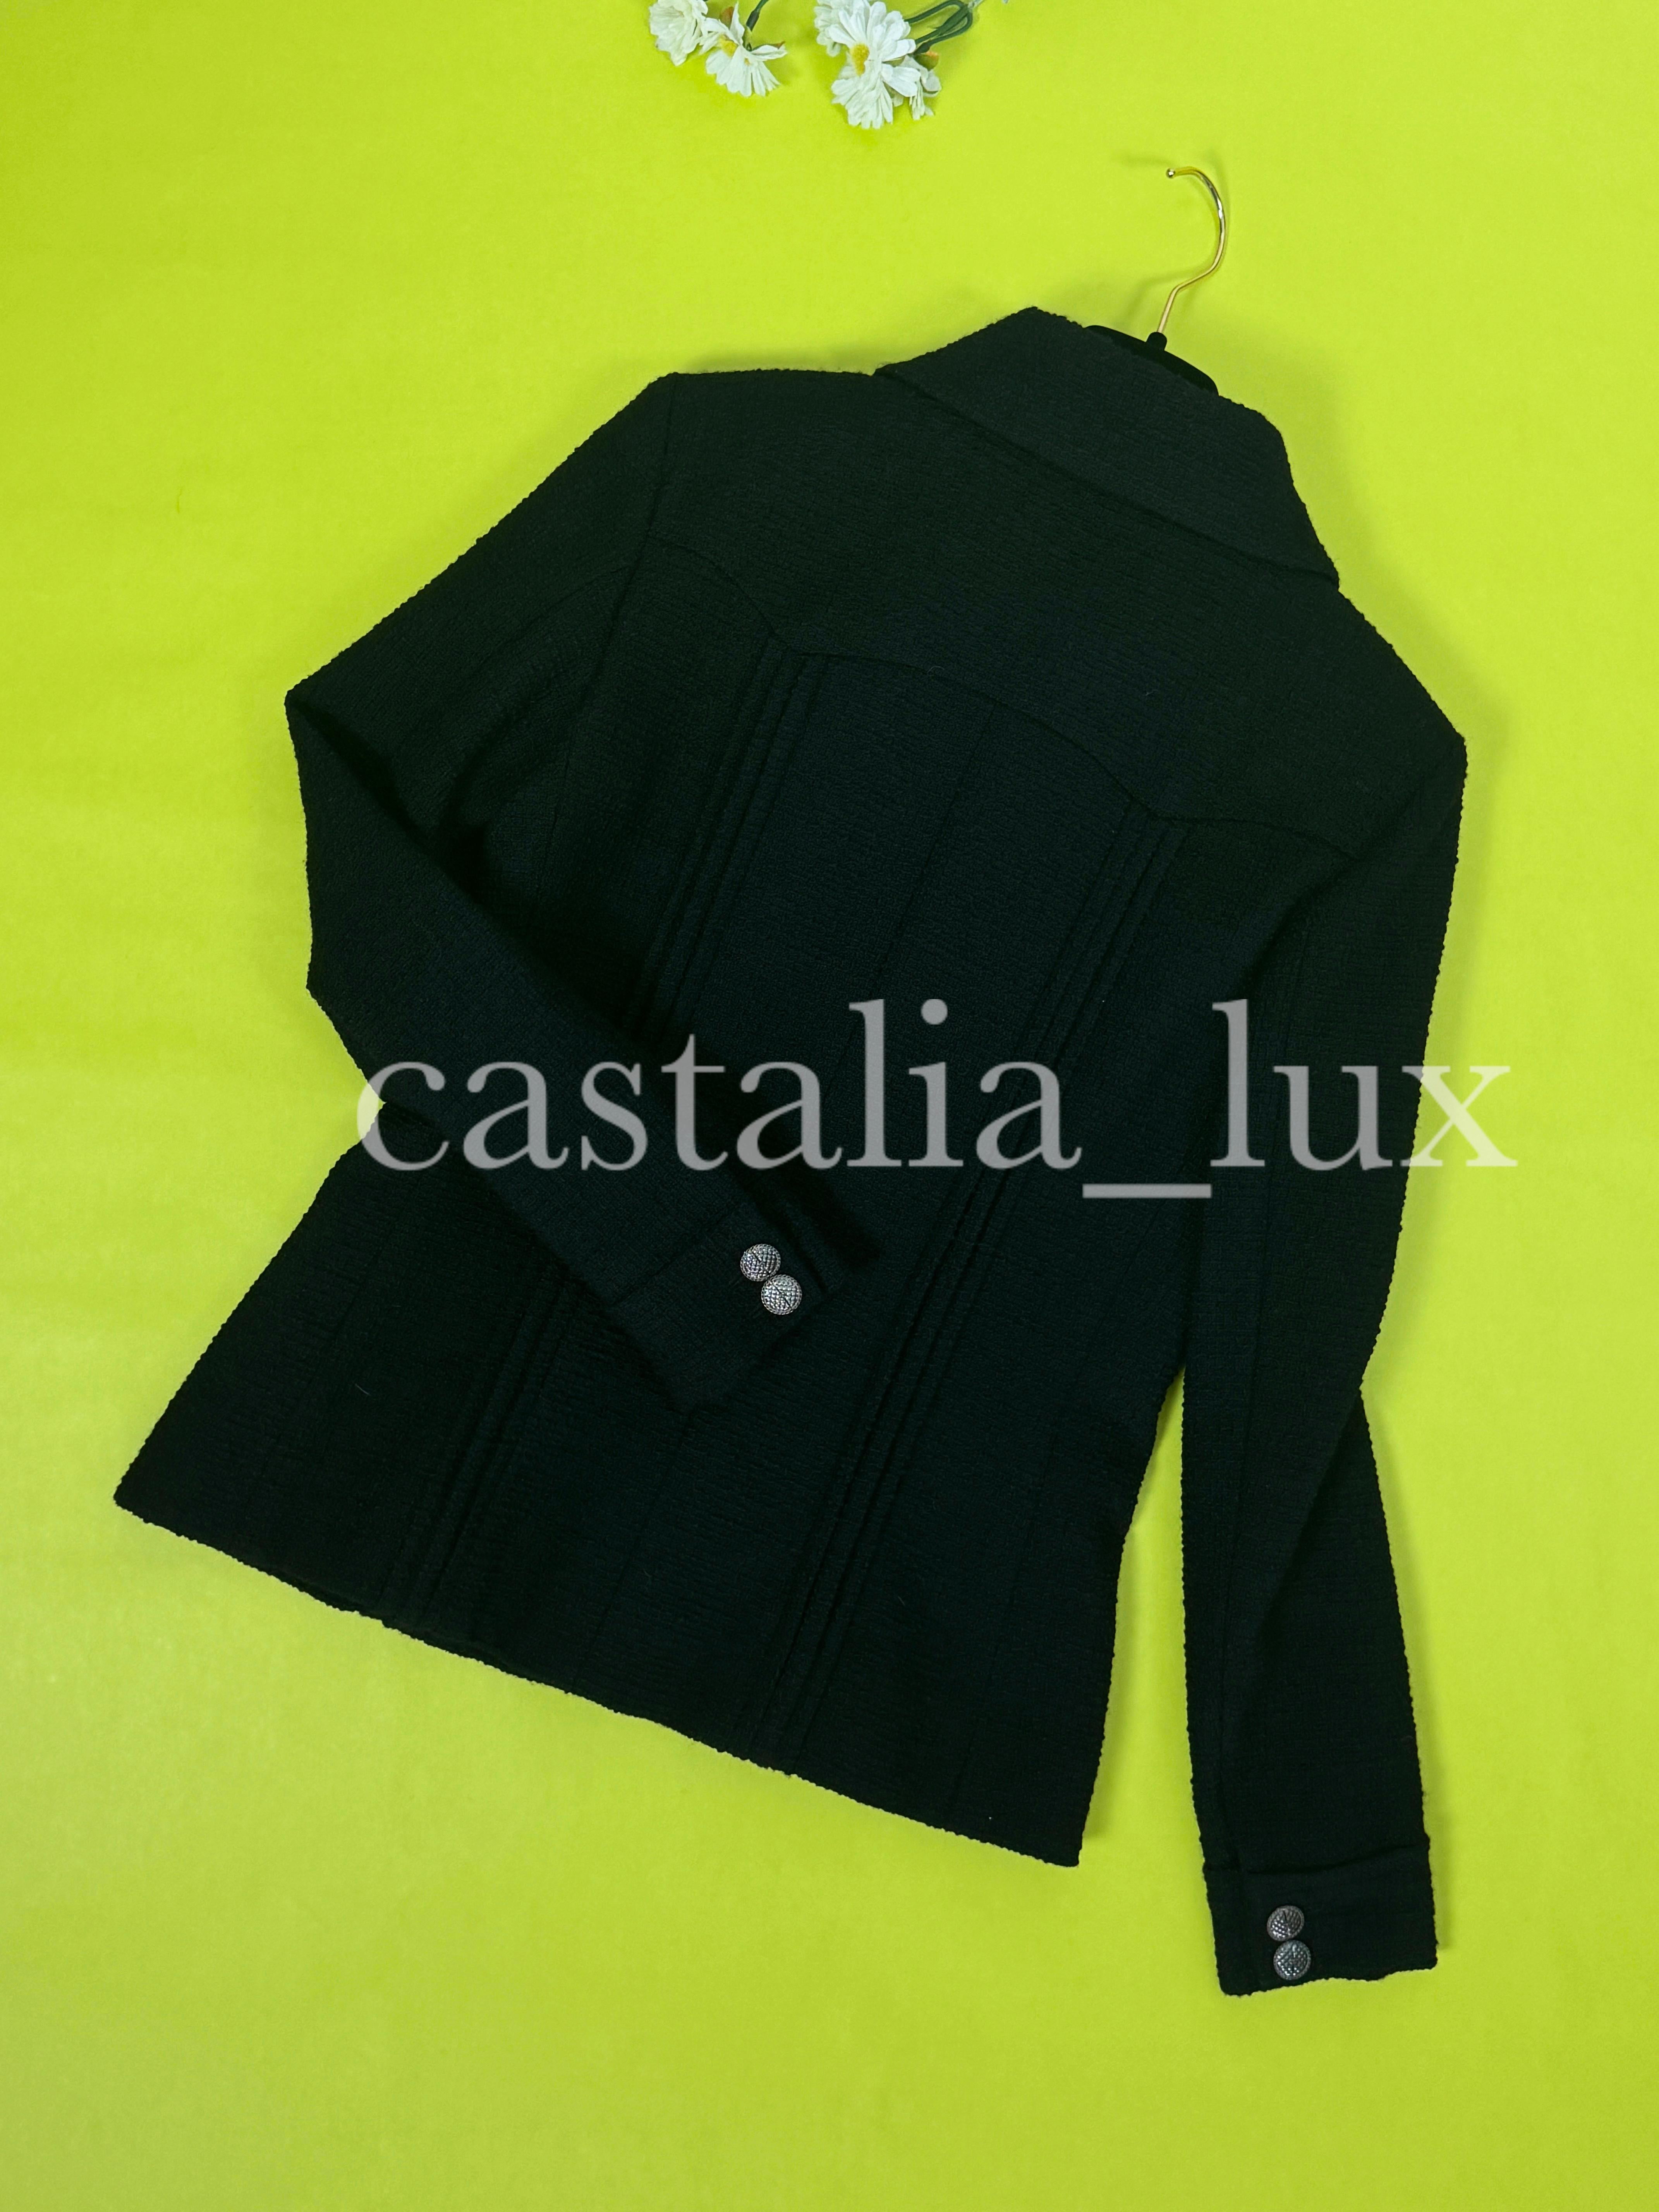 Chanel New Paris / Cuba Black Tweed Jacket  For Sale 14